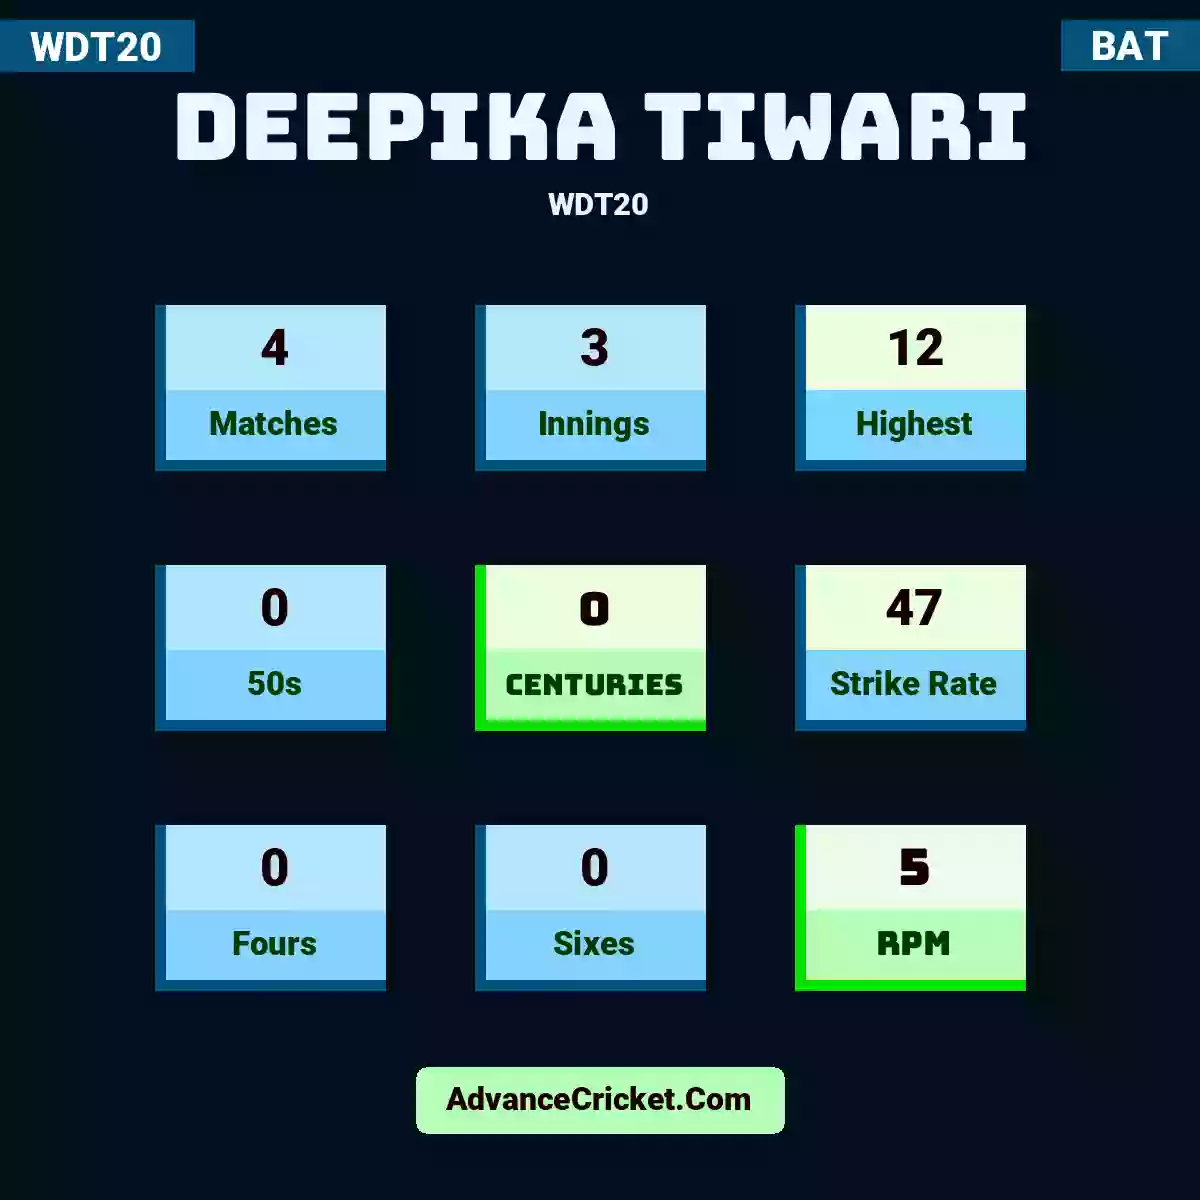 Deepika Tiwari WDT20 , Deepika Tiwari played 4 matches, scored 12 runs as highest, 0 half-centuries, and 0 centuries, with a strike rate of 47. D.Tiwari hit 0 fours and 0 sixes, with an RPM of 5.